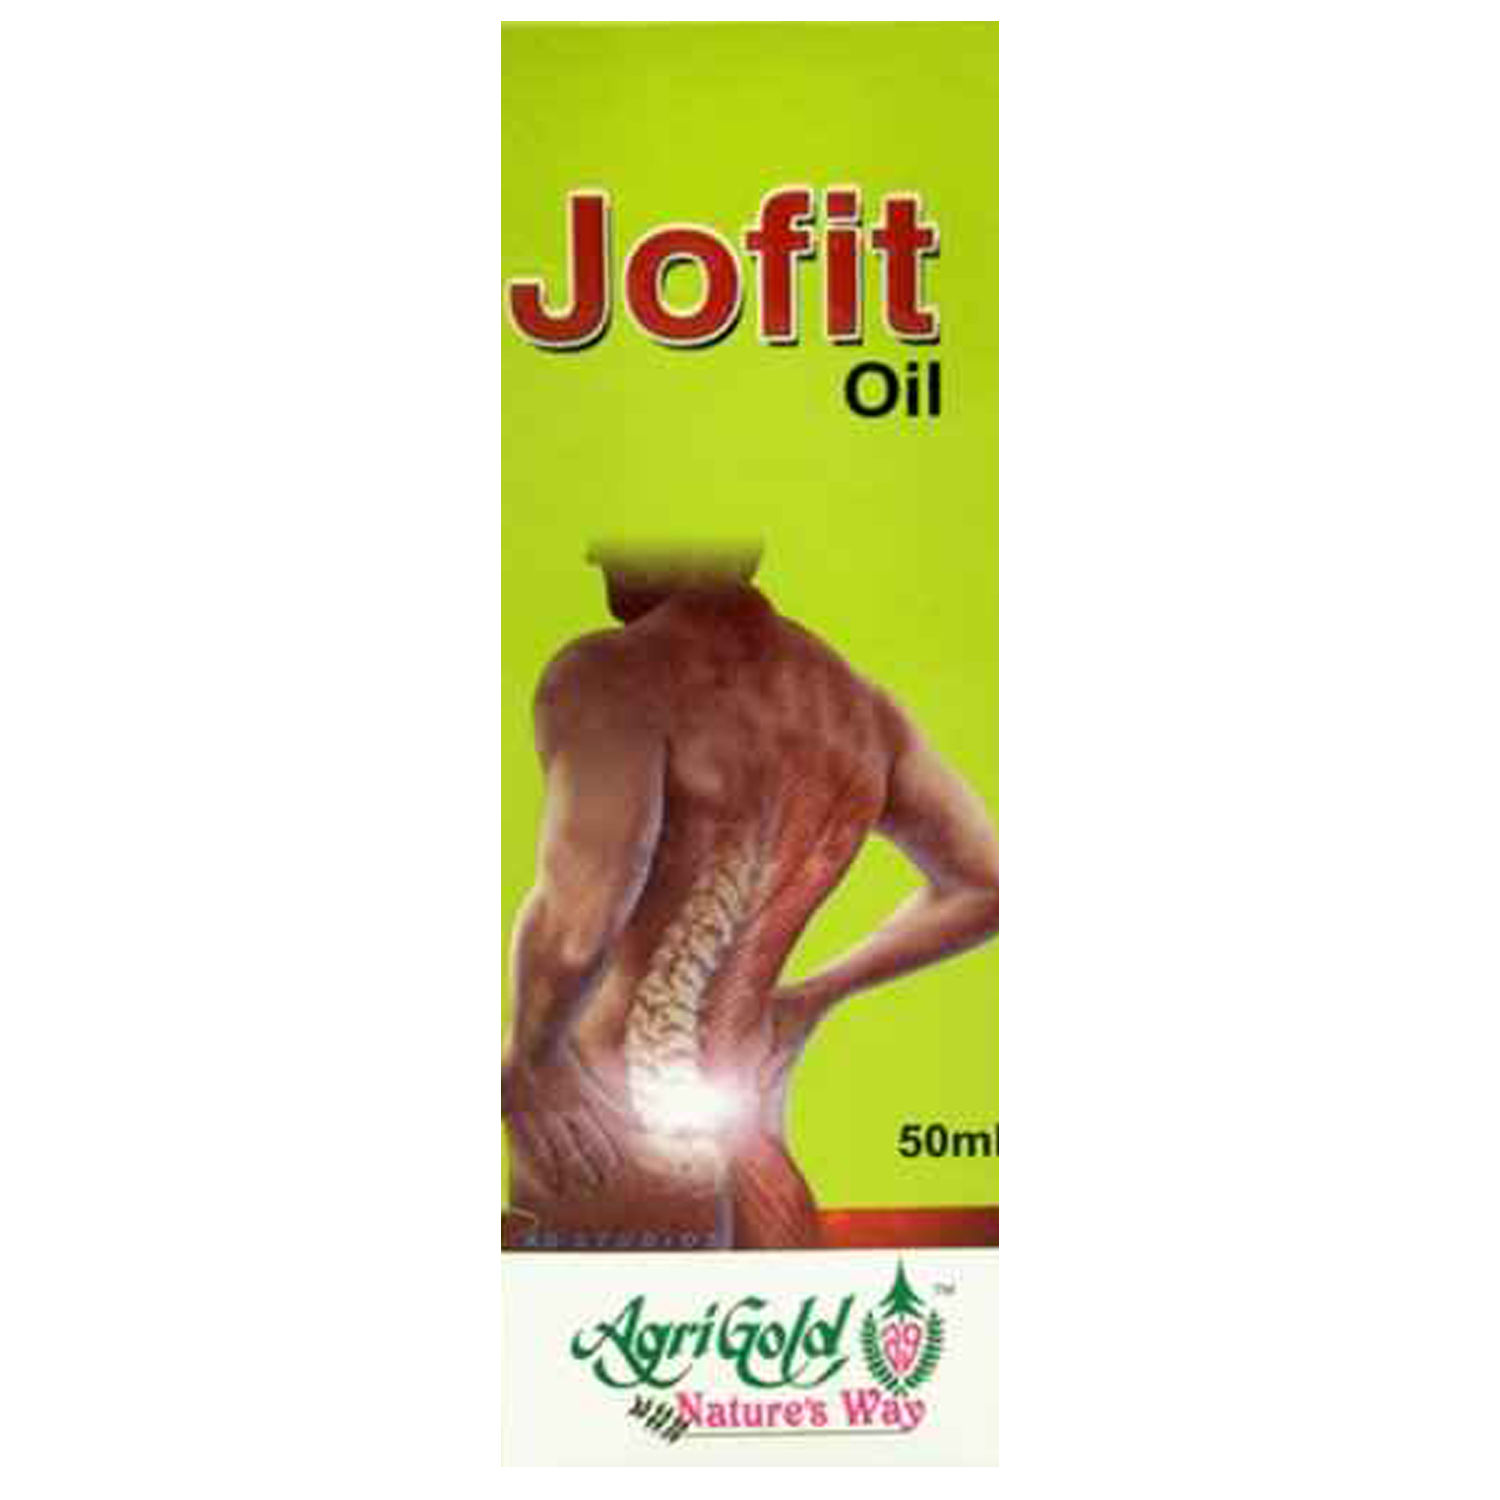 Buy Jofit Oil 50ml Online